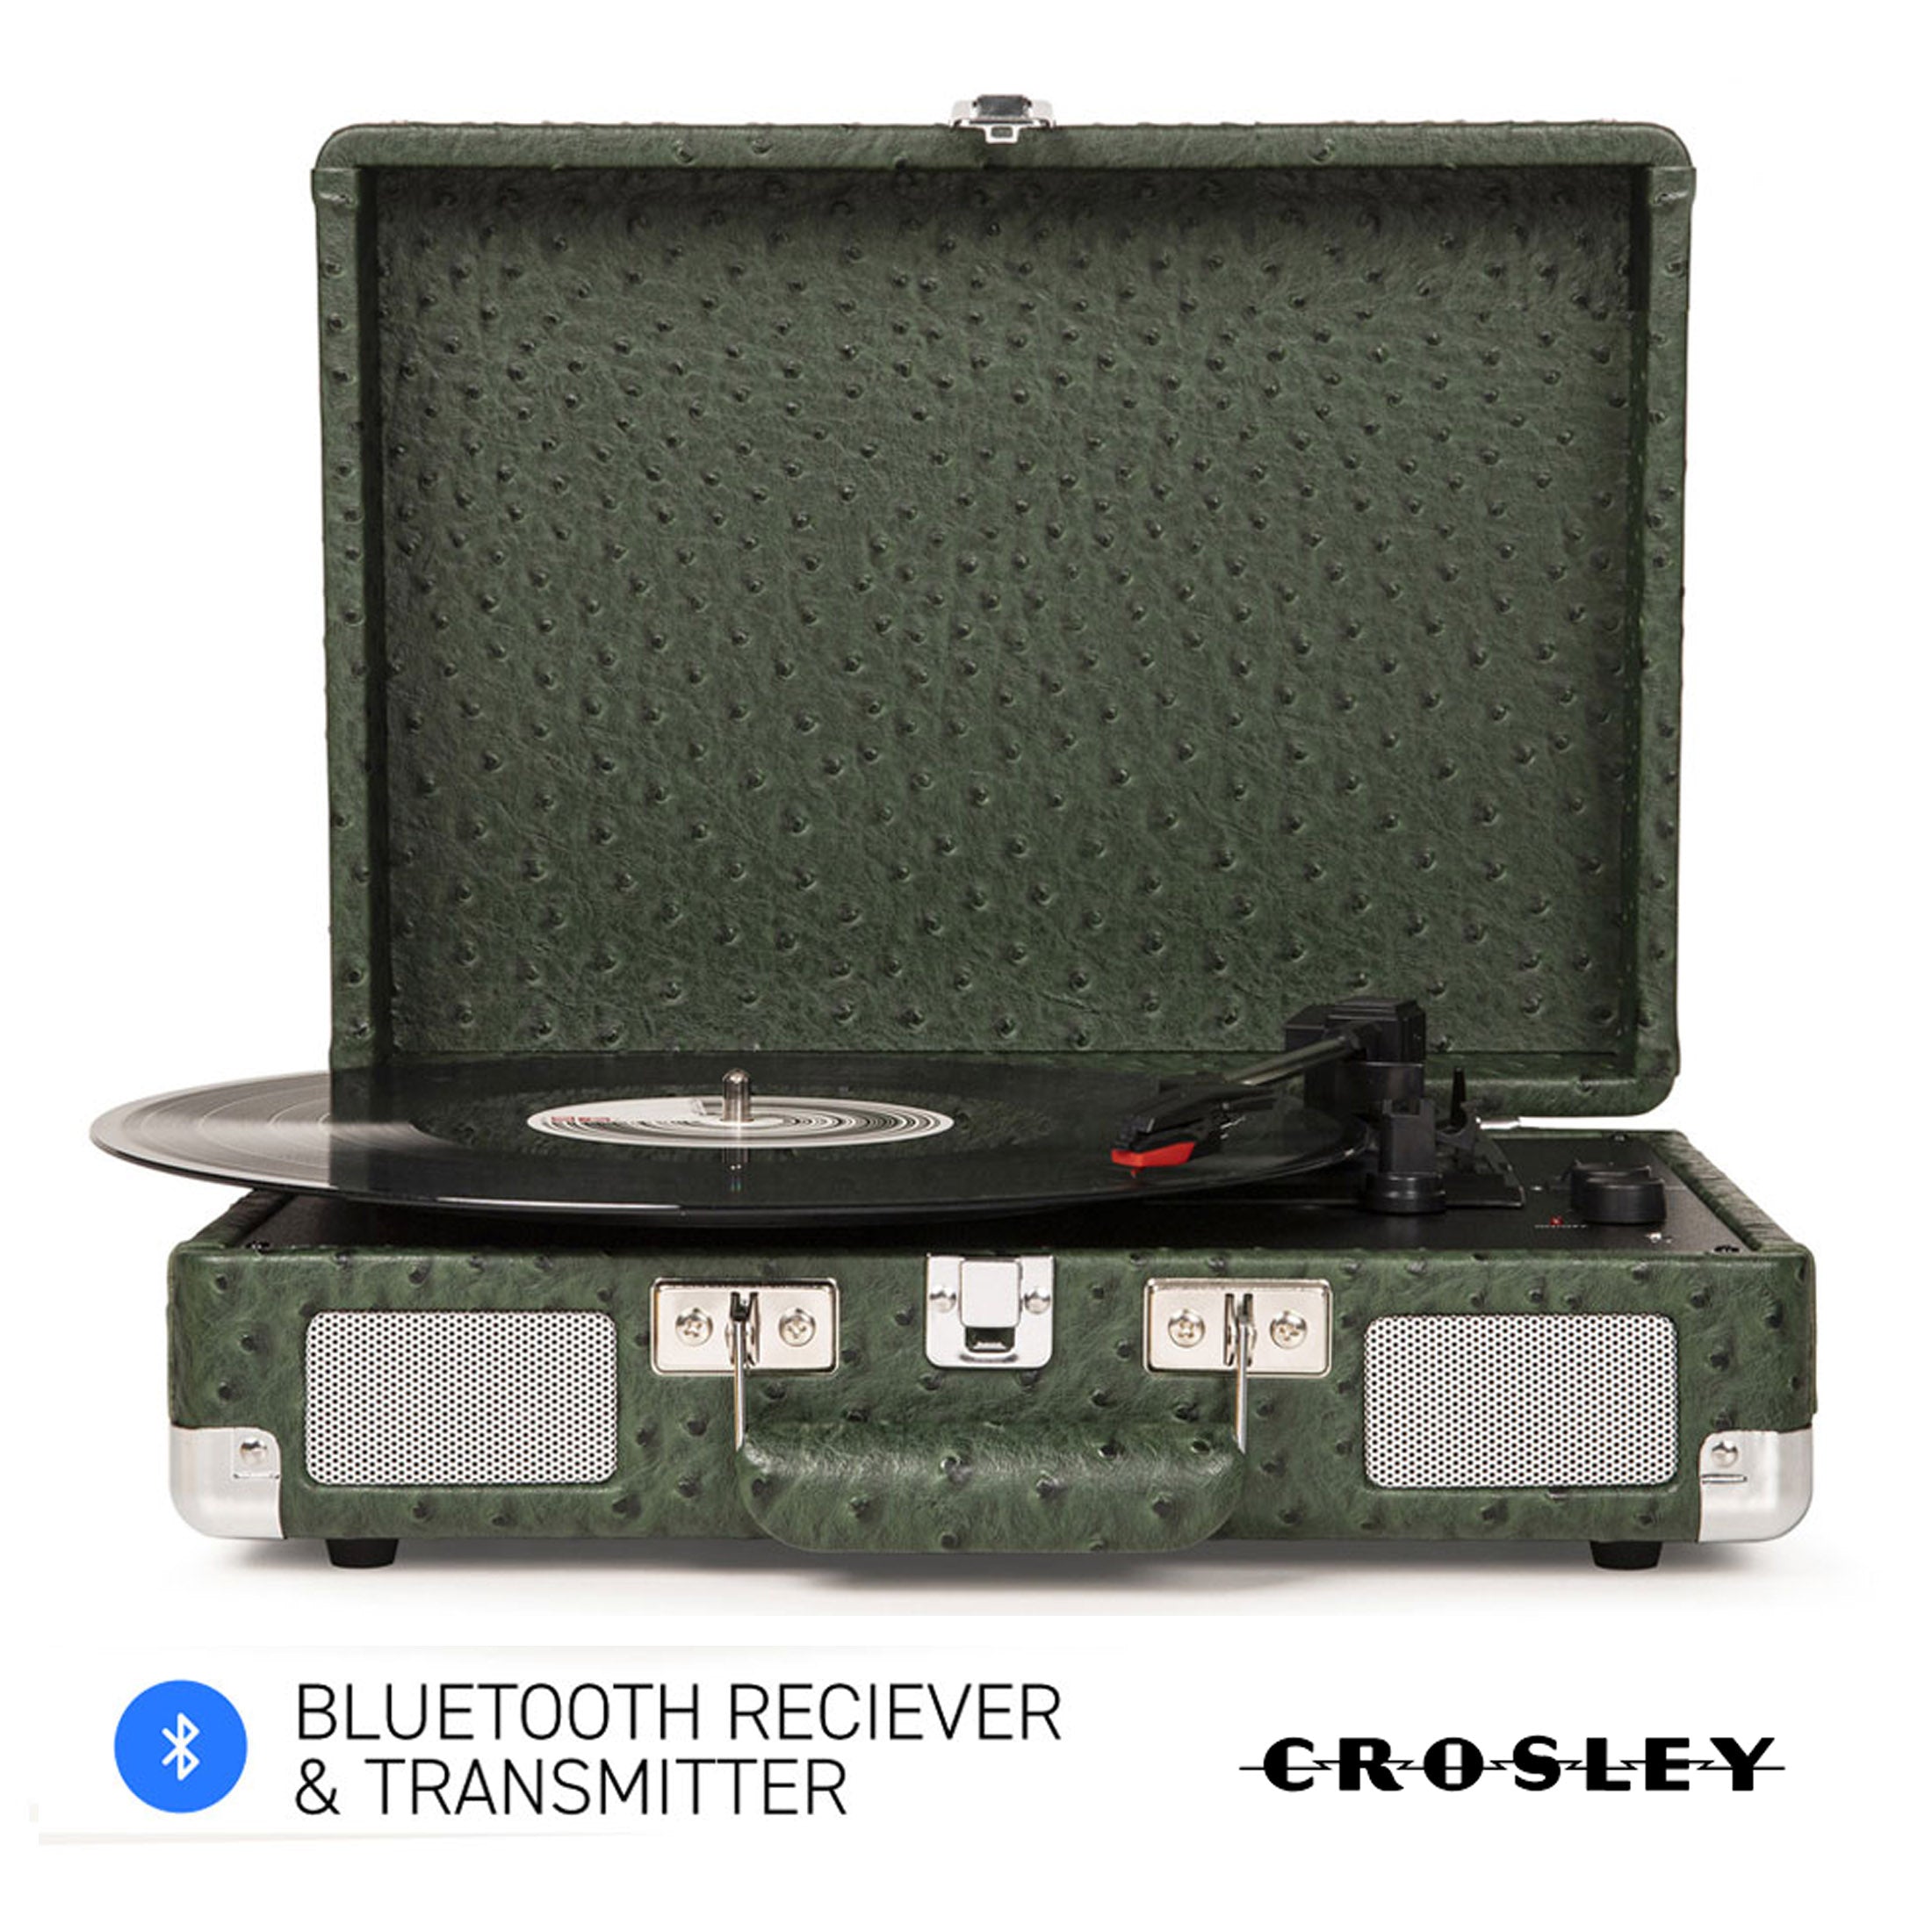 Crosley Cruiser Plus Bluetooth Turntable 3 Speed Ostrich Green - SILBERSHELL